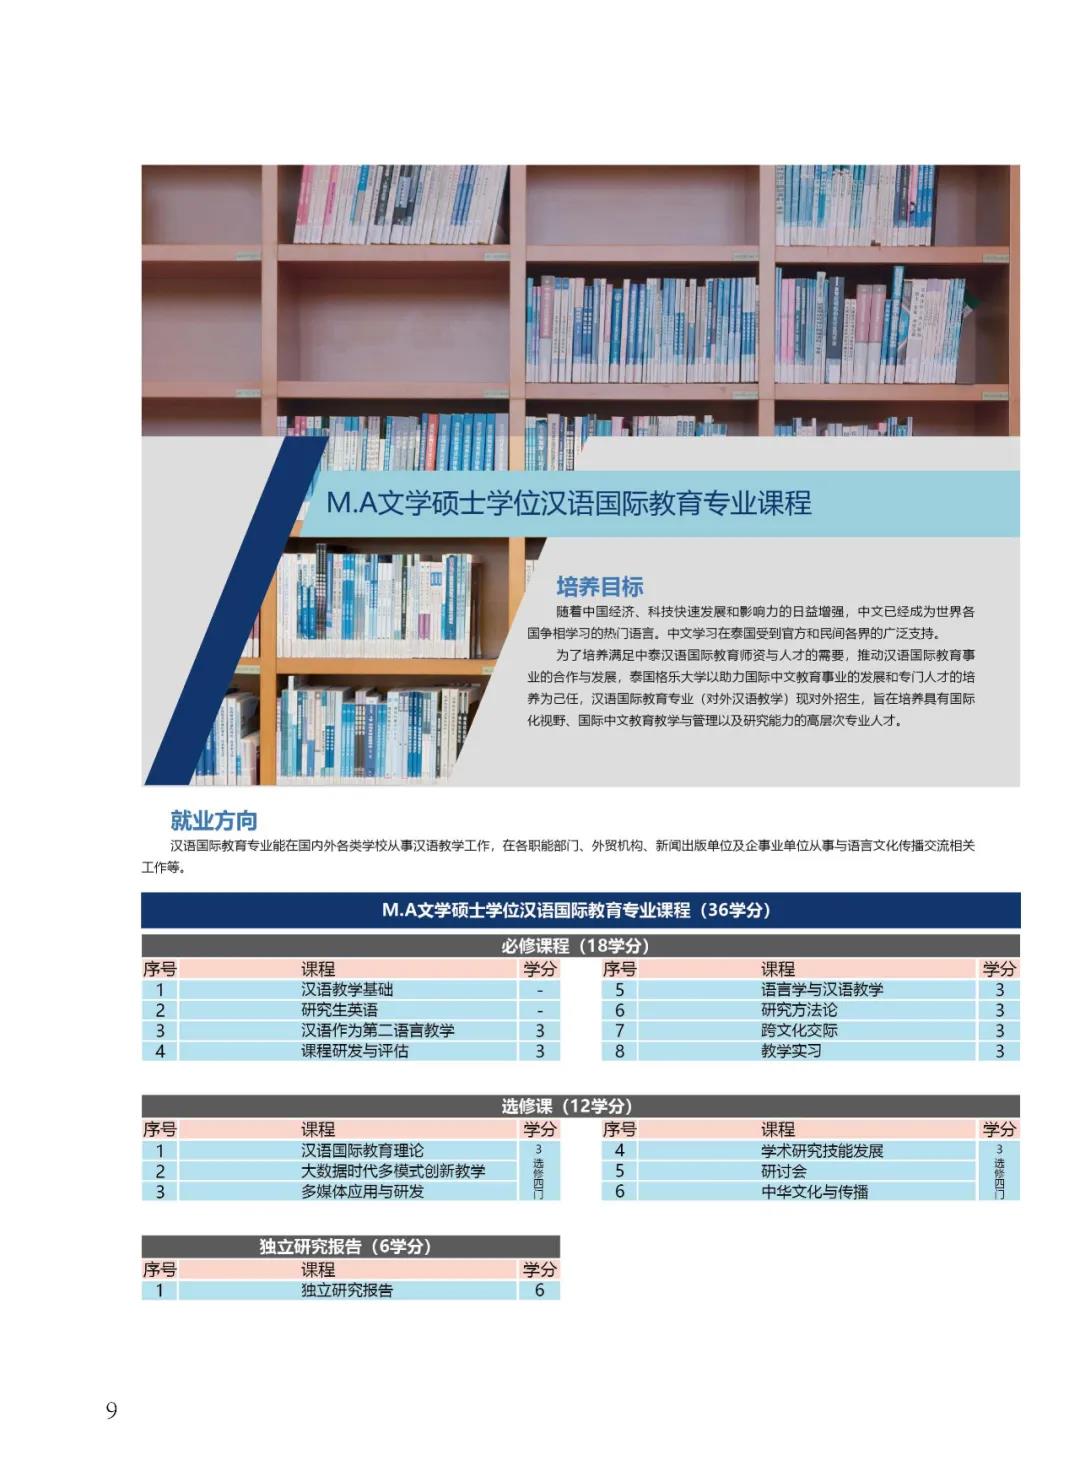 M.A文学硕士学位汉语国际教育专业课程.jpg